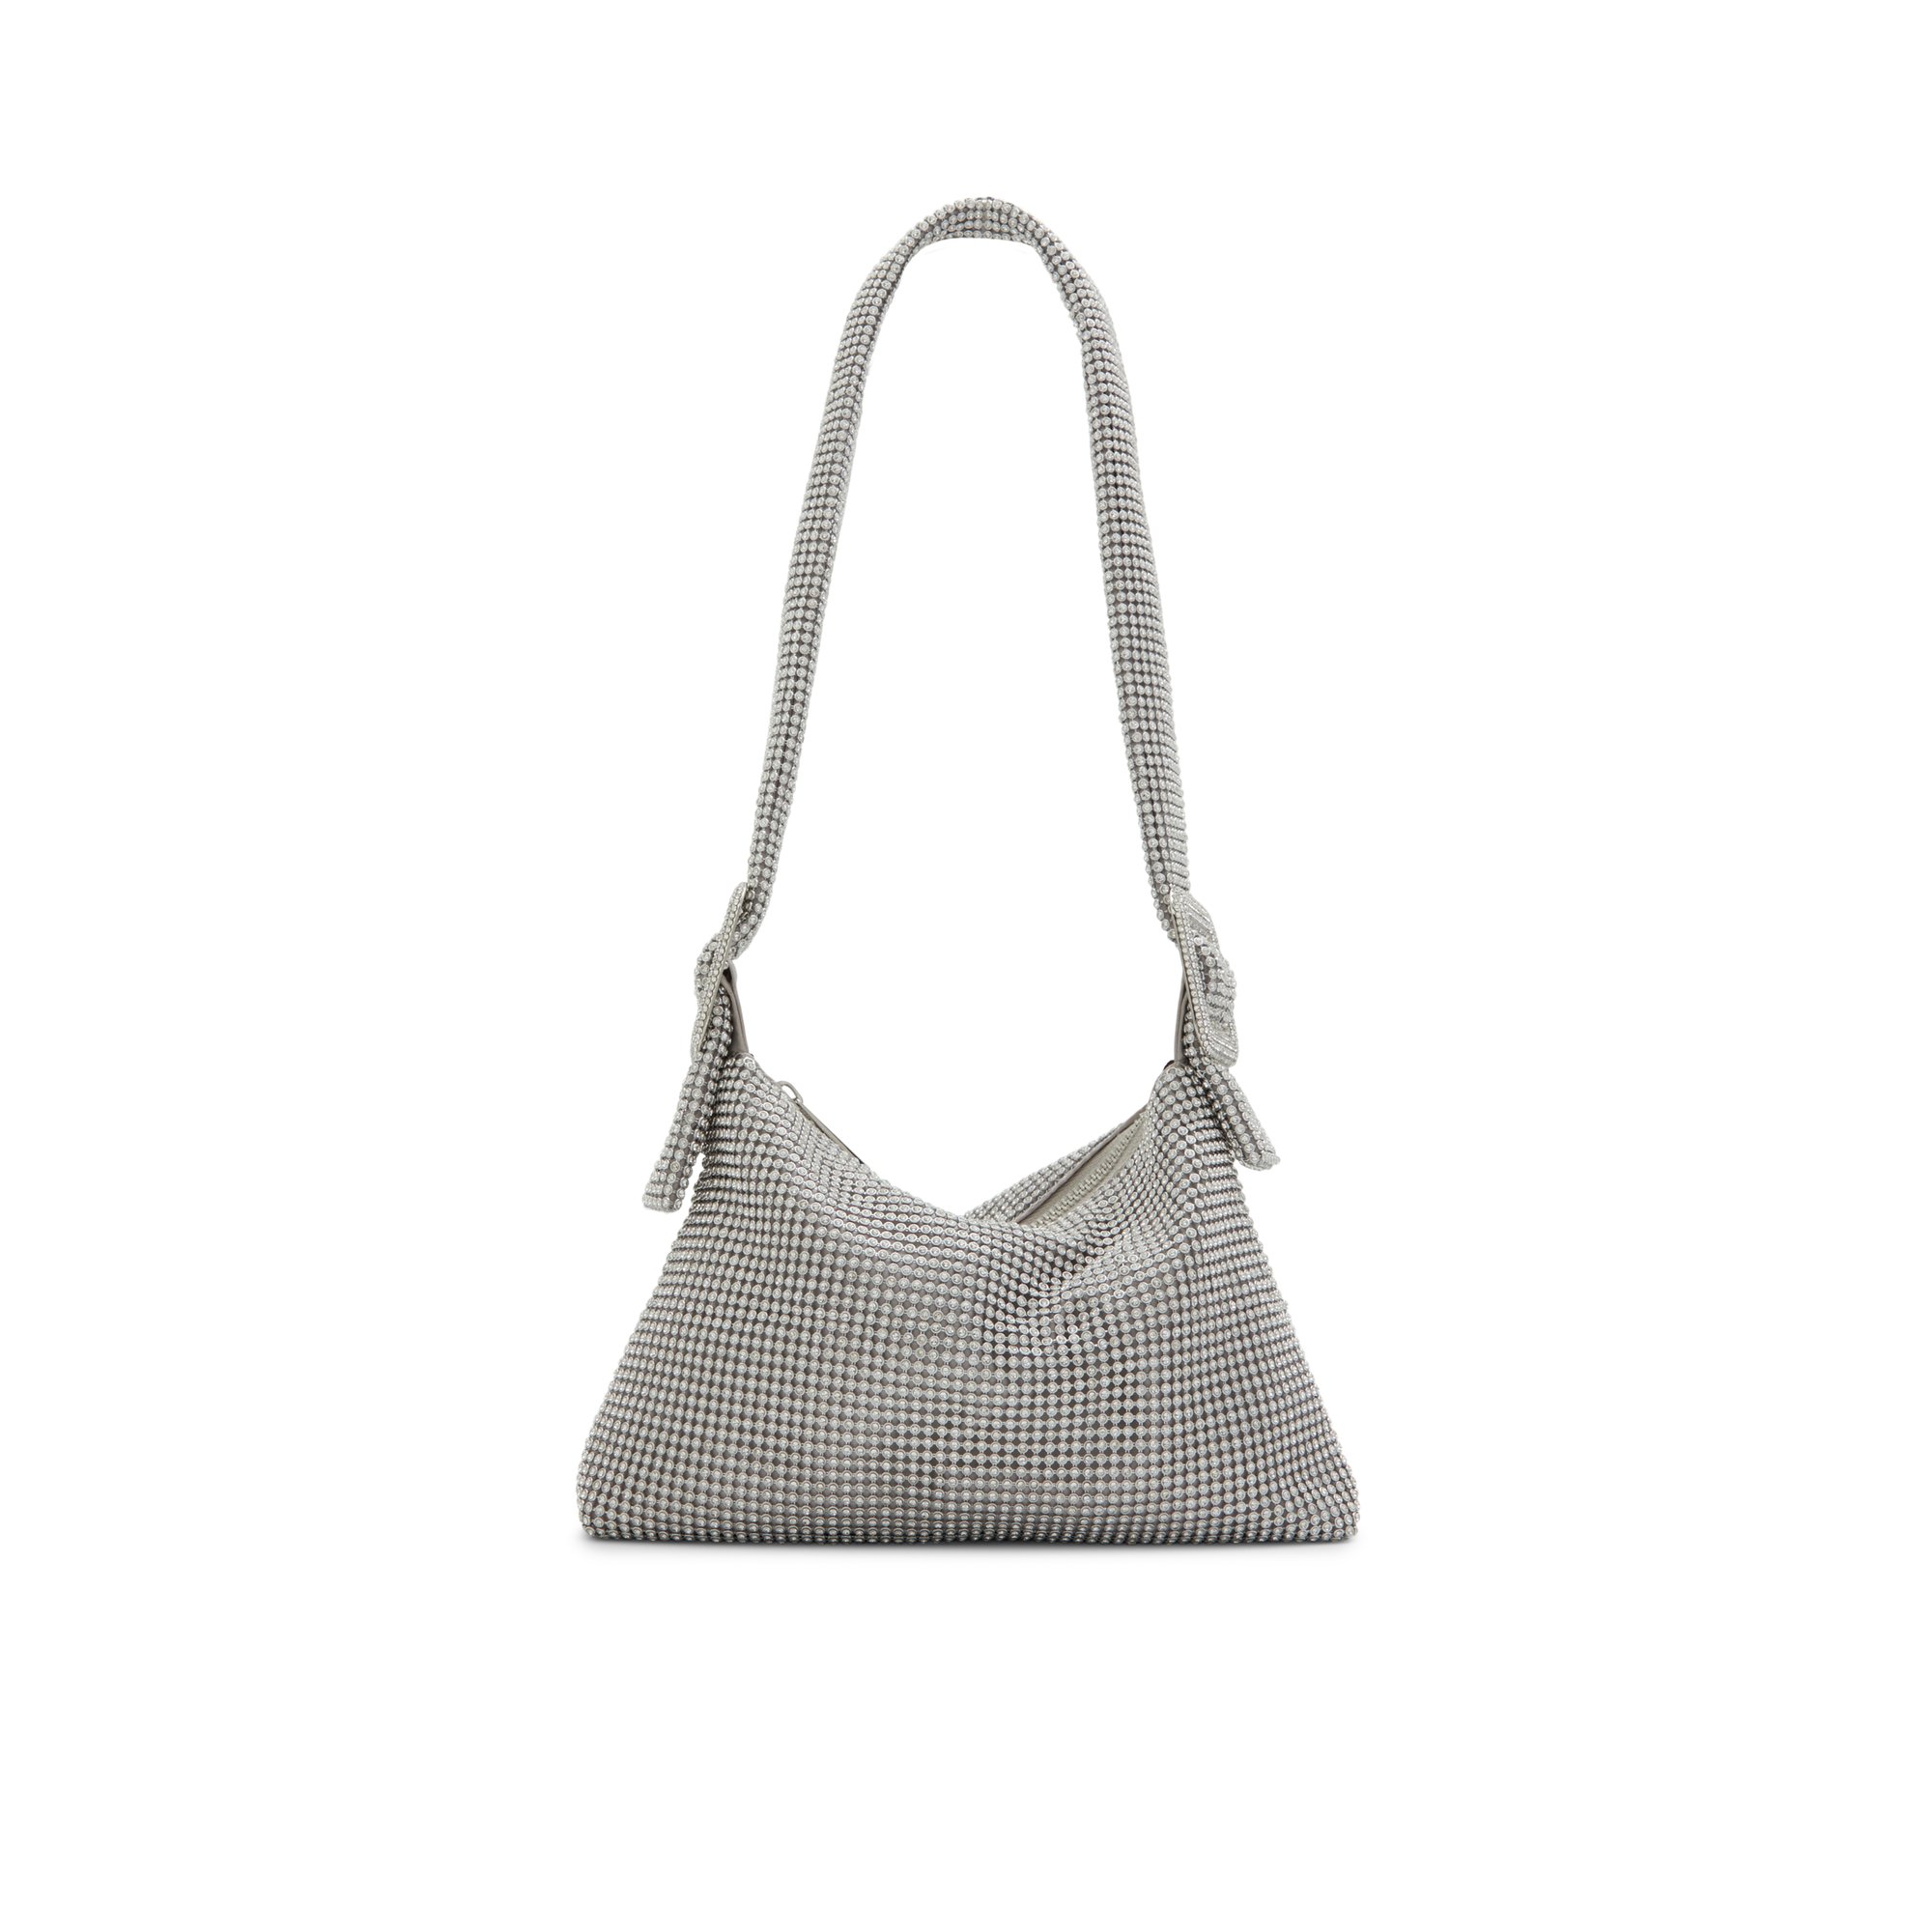 ALDO Banalia - Women's Shoulder Bag Handbag - Silver